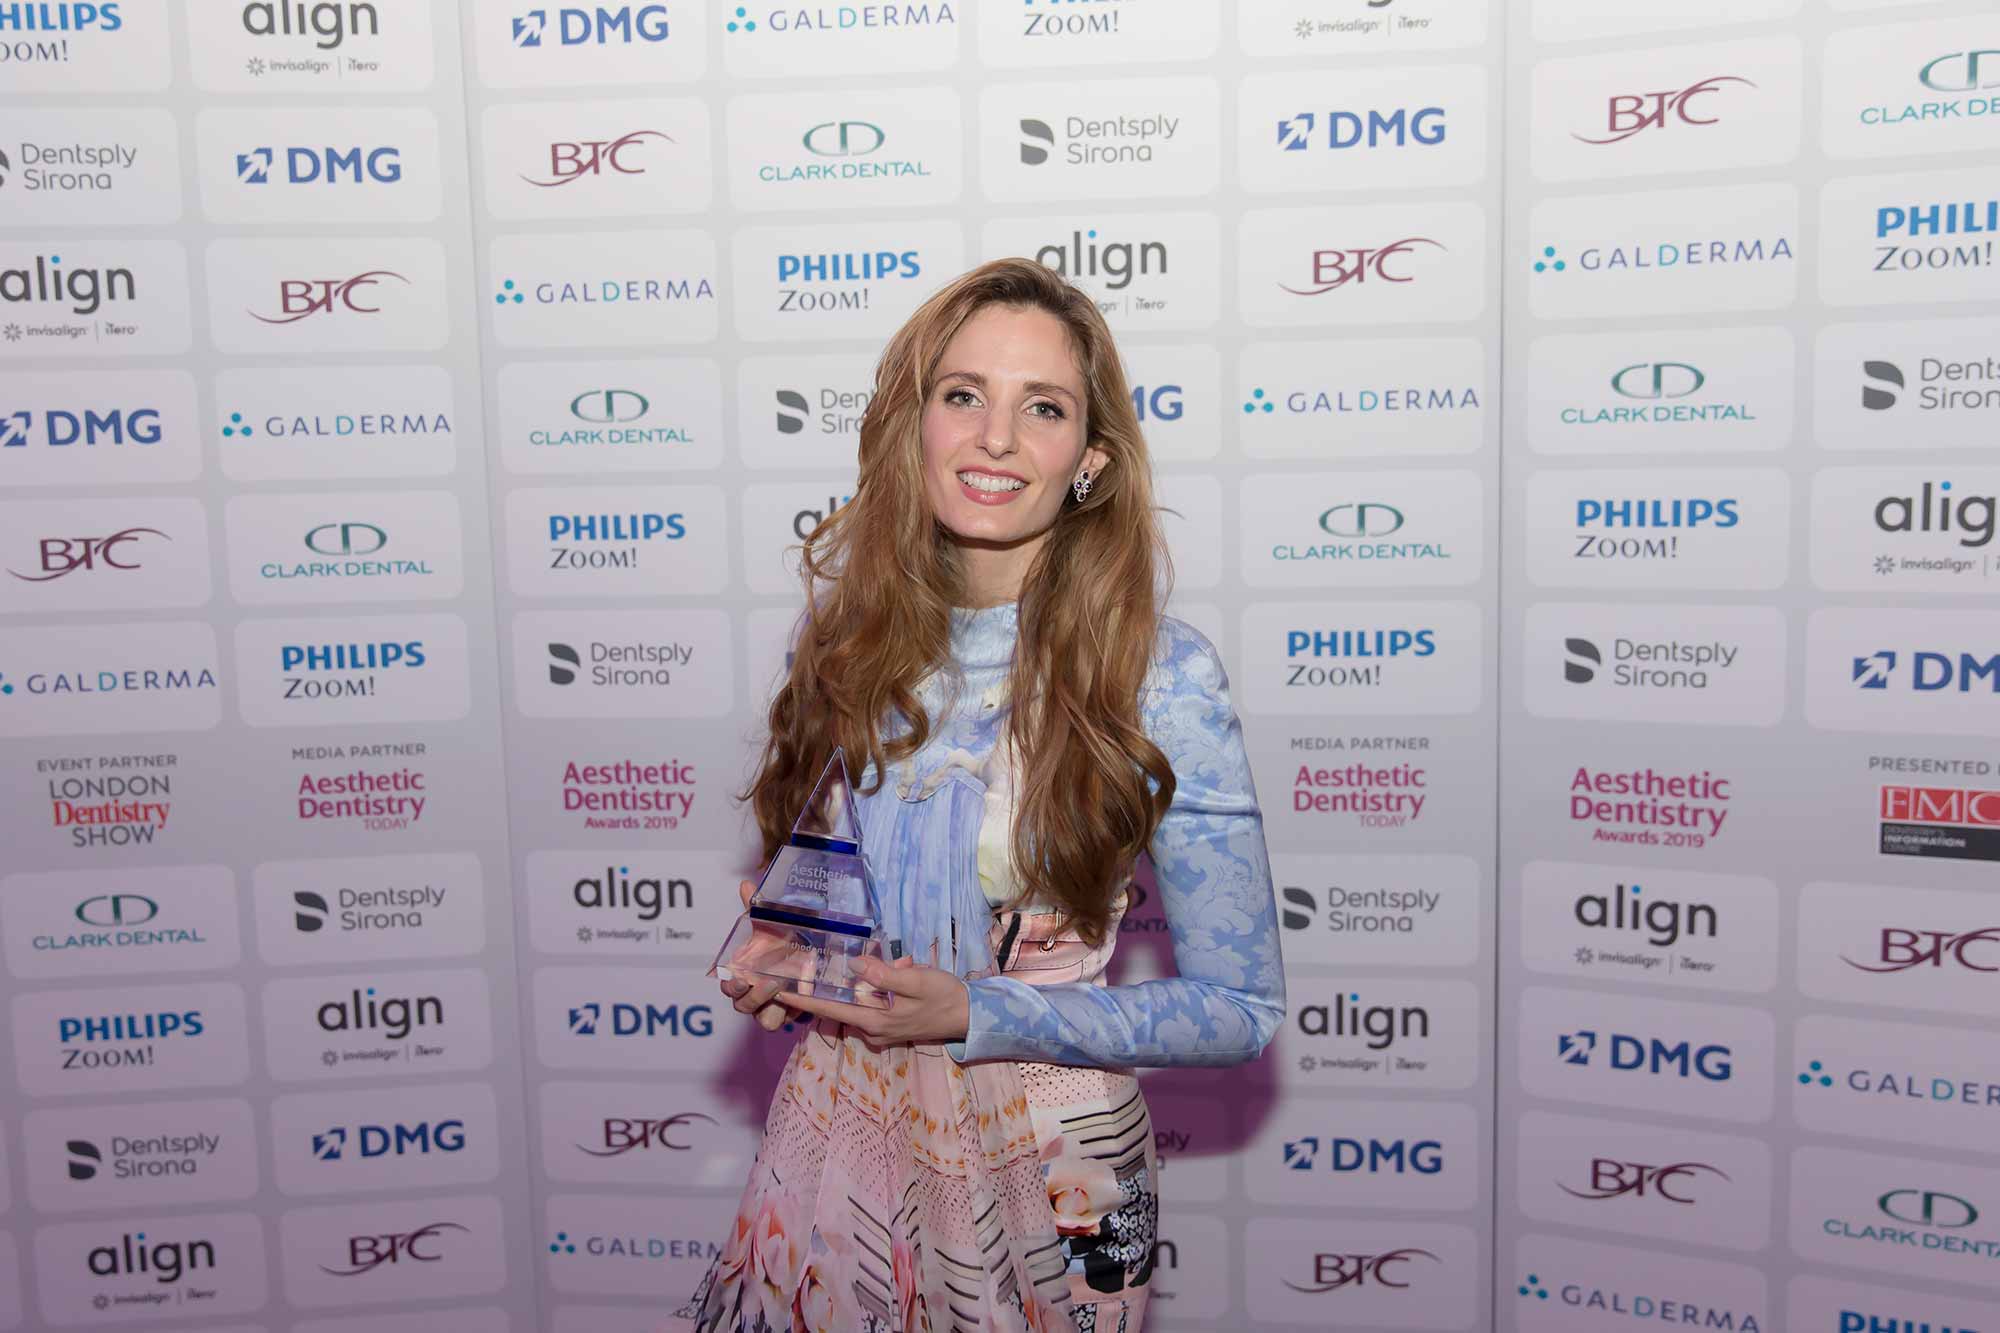 melina paschali at the aesthetic dentistry awards